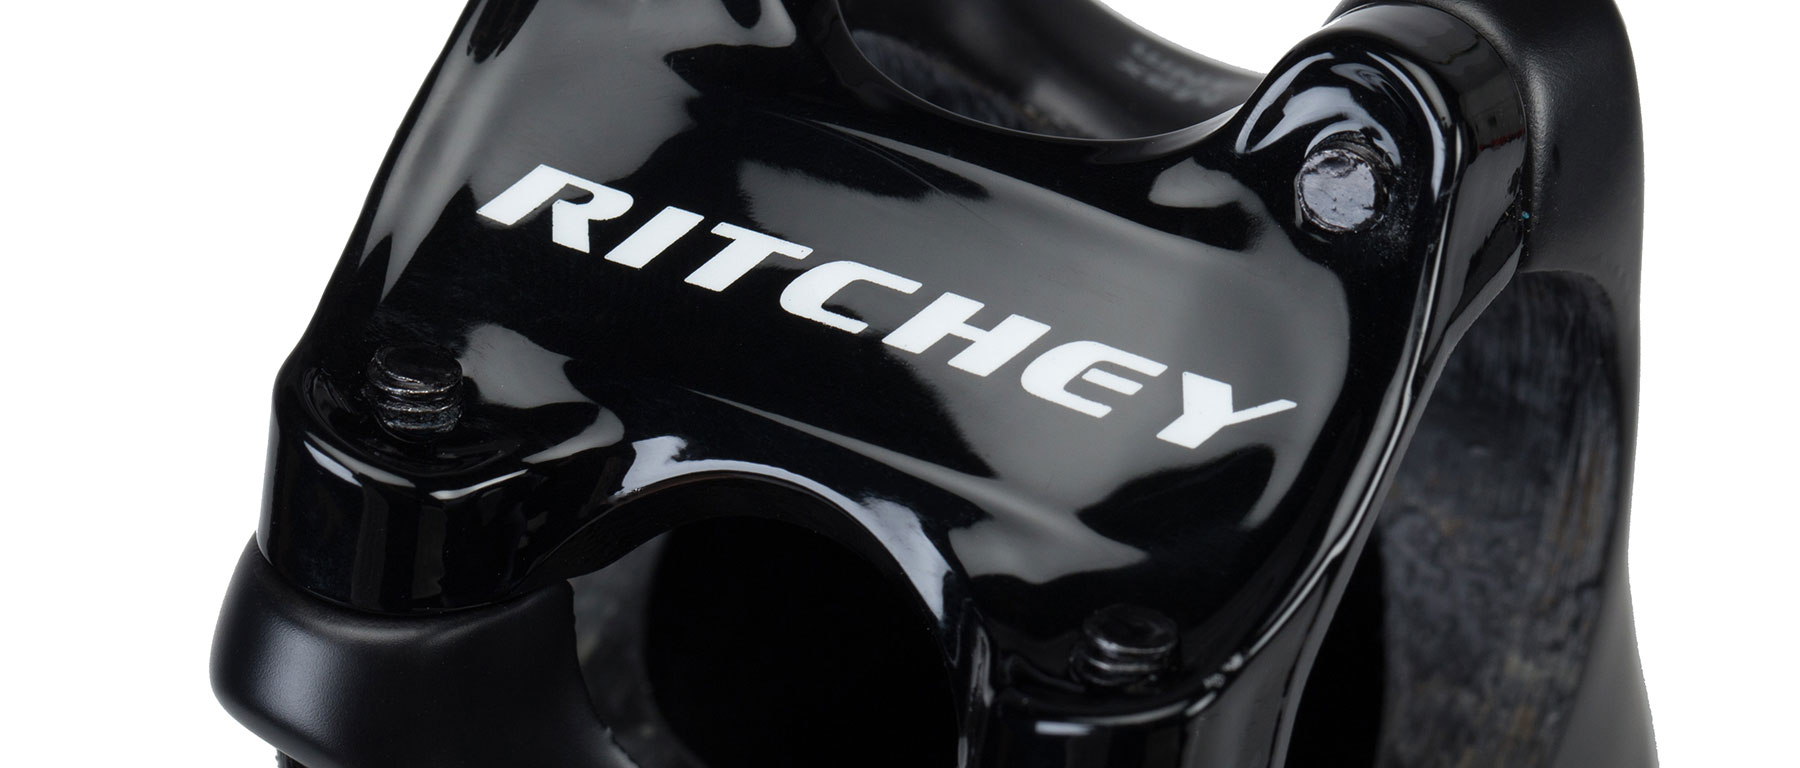 Ritchey Superlogic Carbon C260 1 1/4 inch  Stem